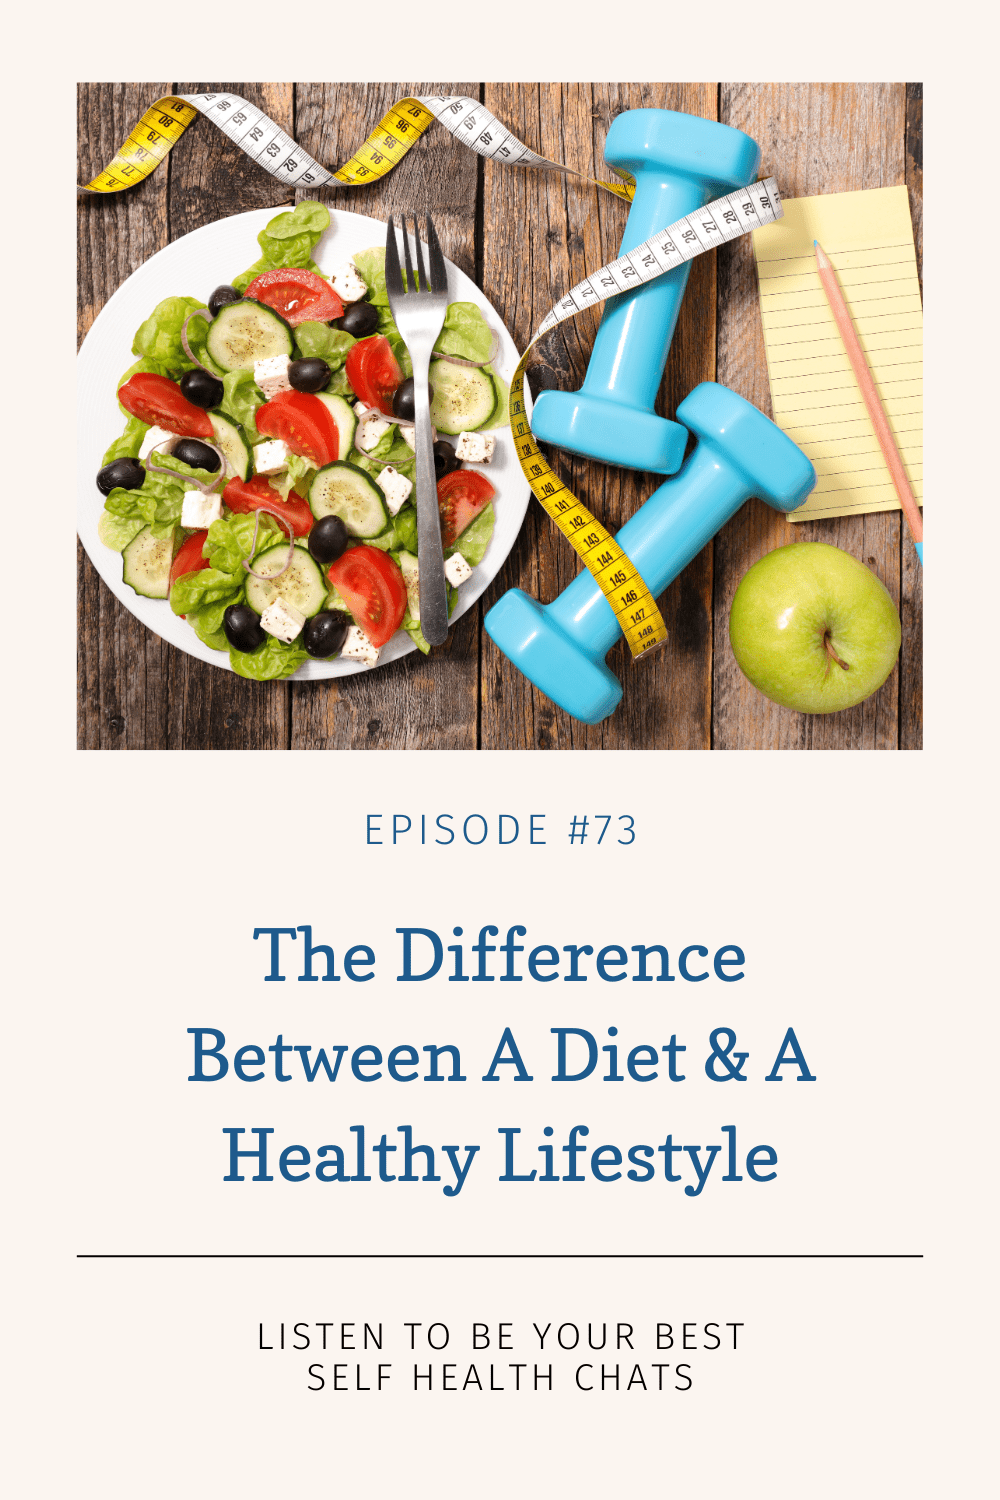 Diet vs. Lifestyle